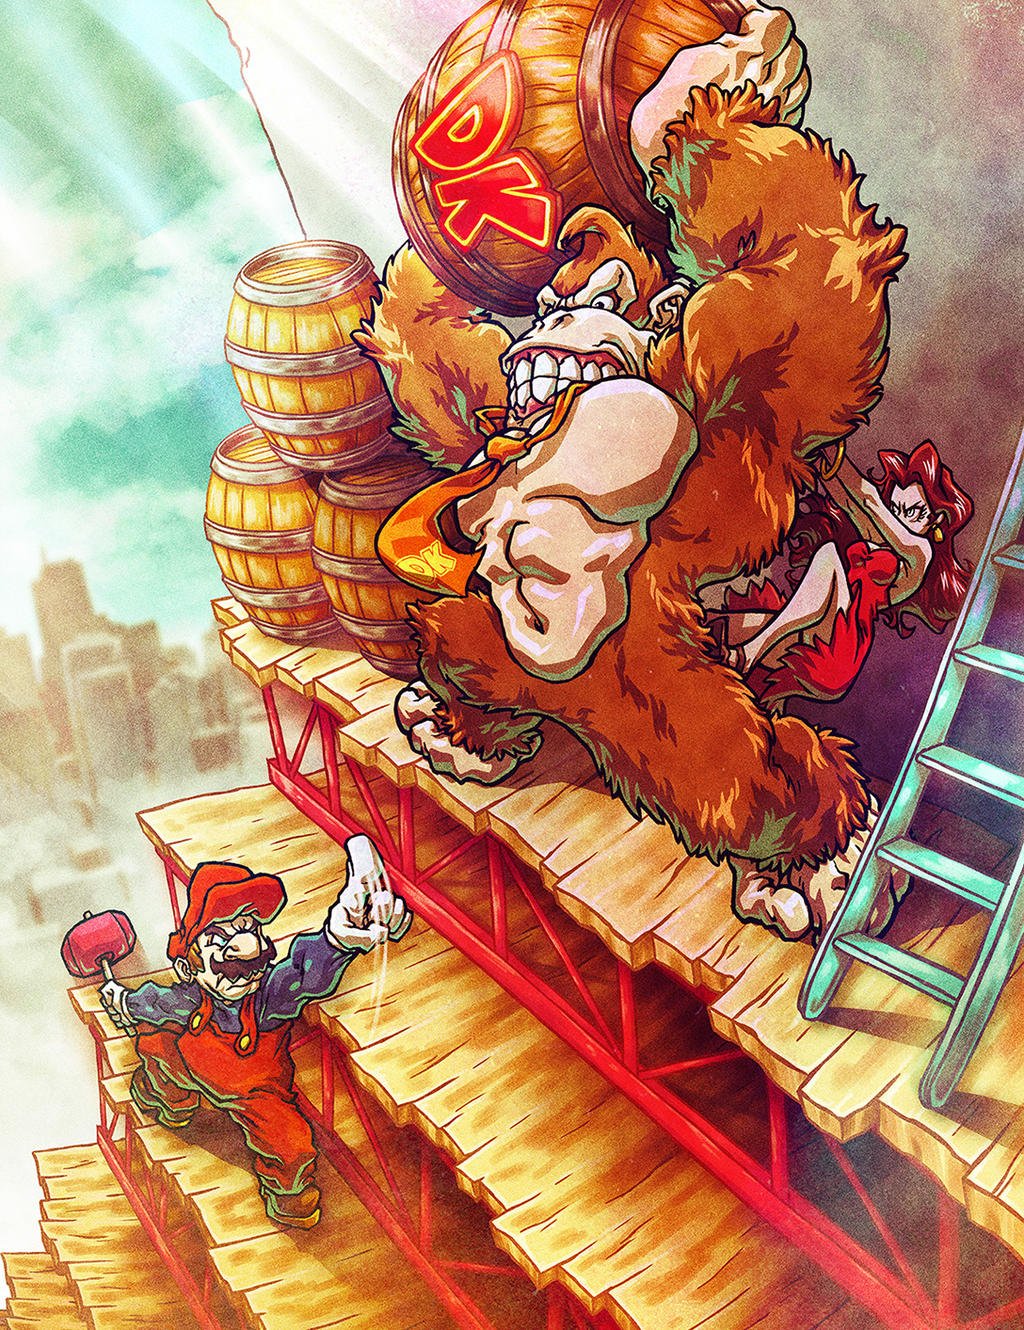 Super Mario AU- Donkey Kong by GavinoElDiabloGuapo on DeviantArt